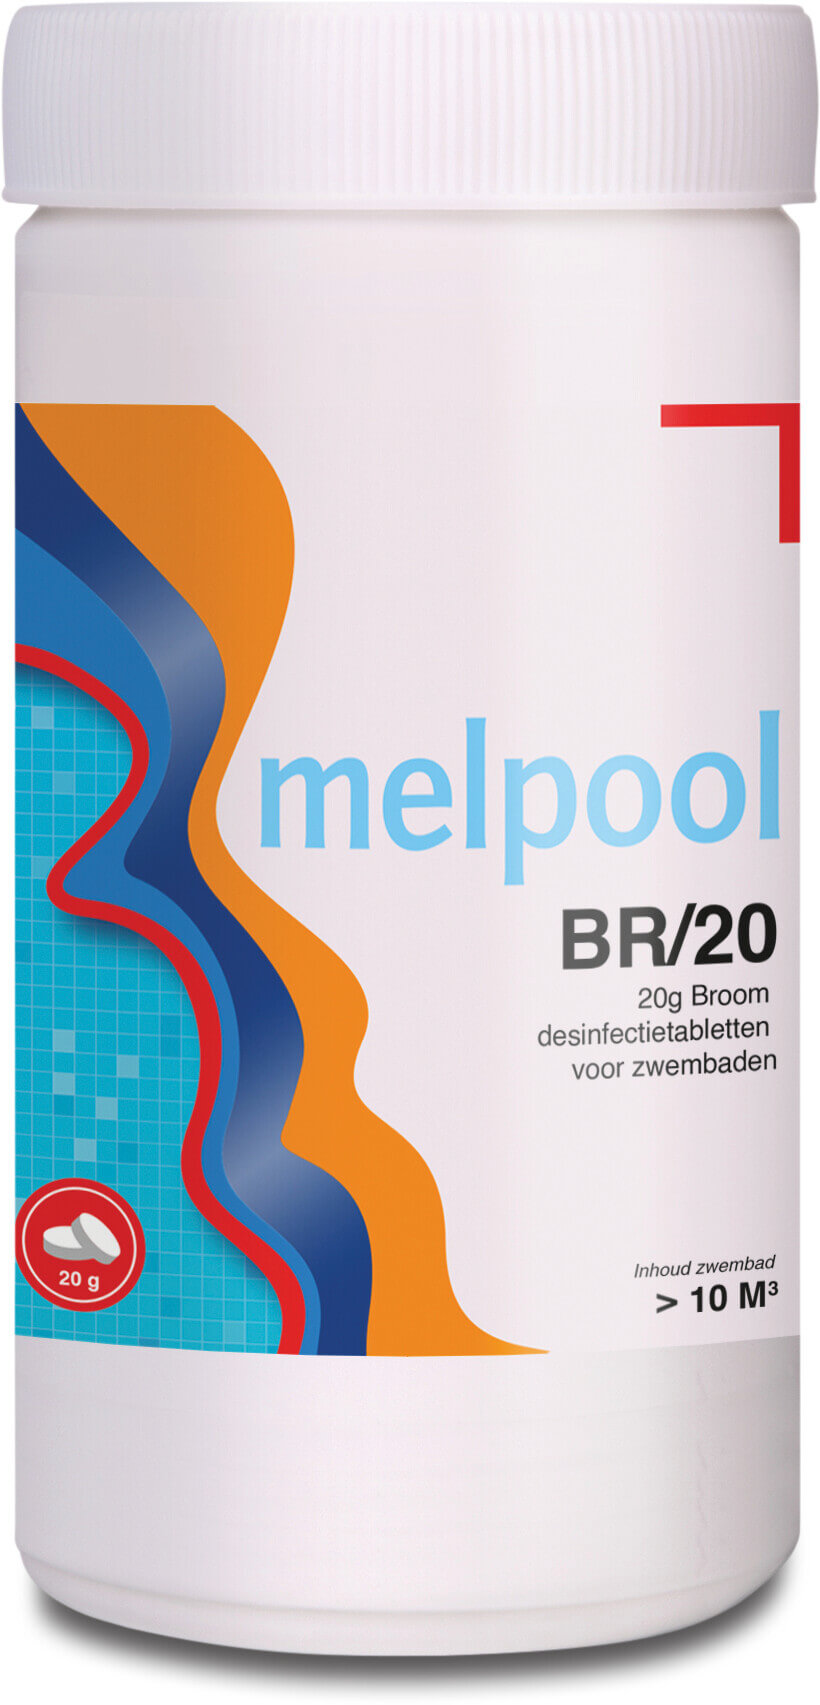 Melpool BR/20 1-Bromo-3-chloro-5,5-dimethylhydantoin 1000g type tab 20g